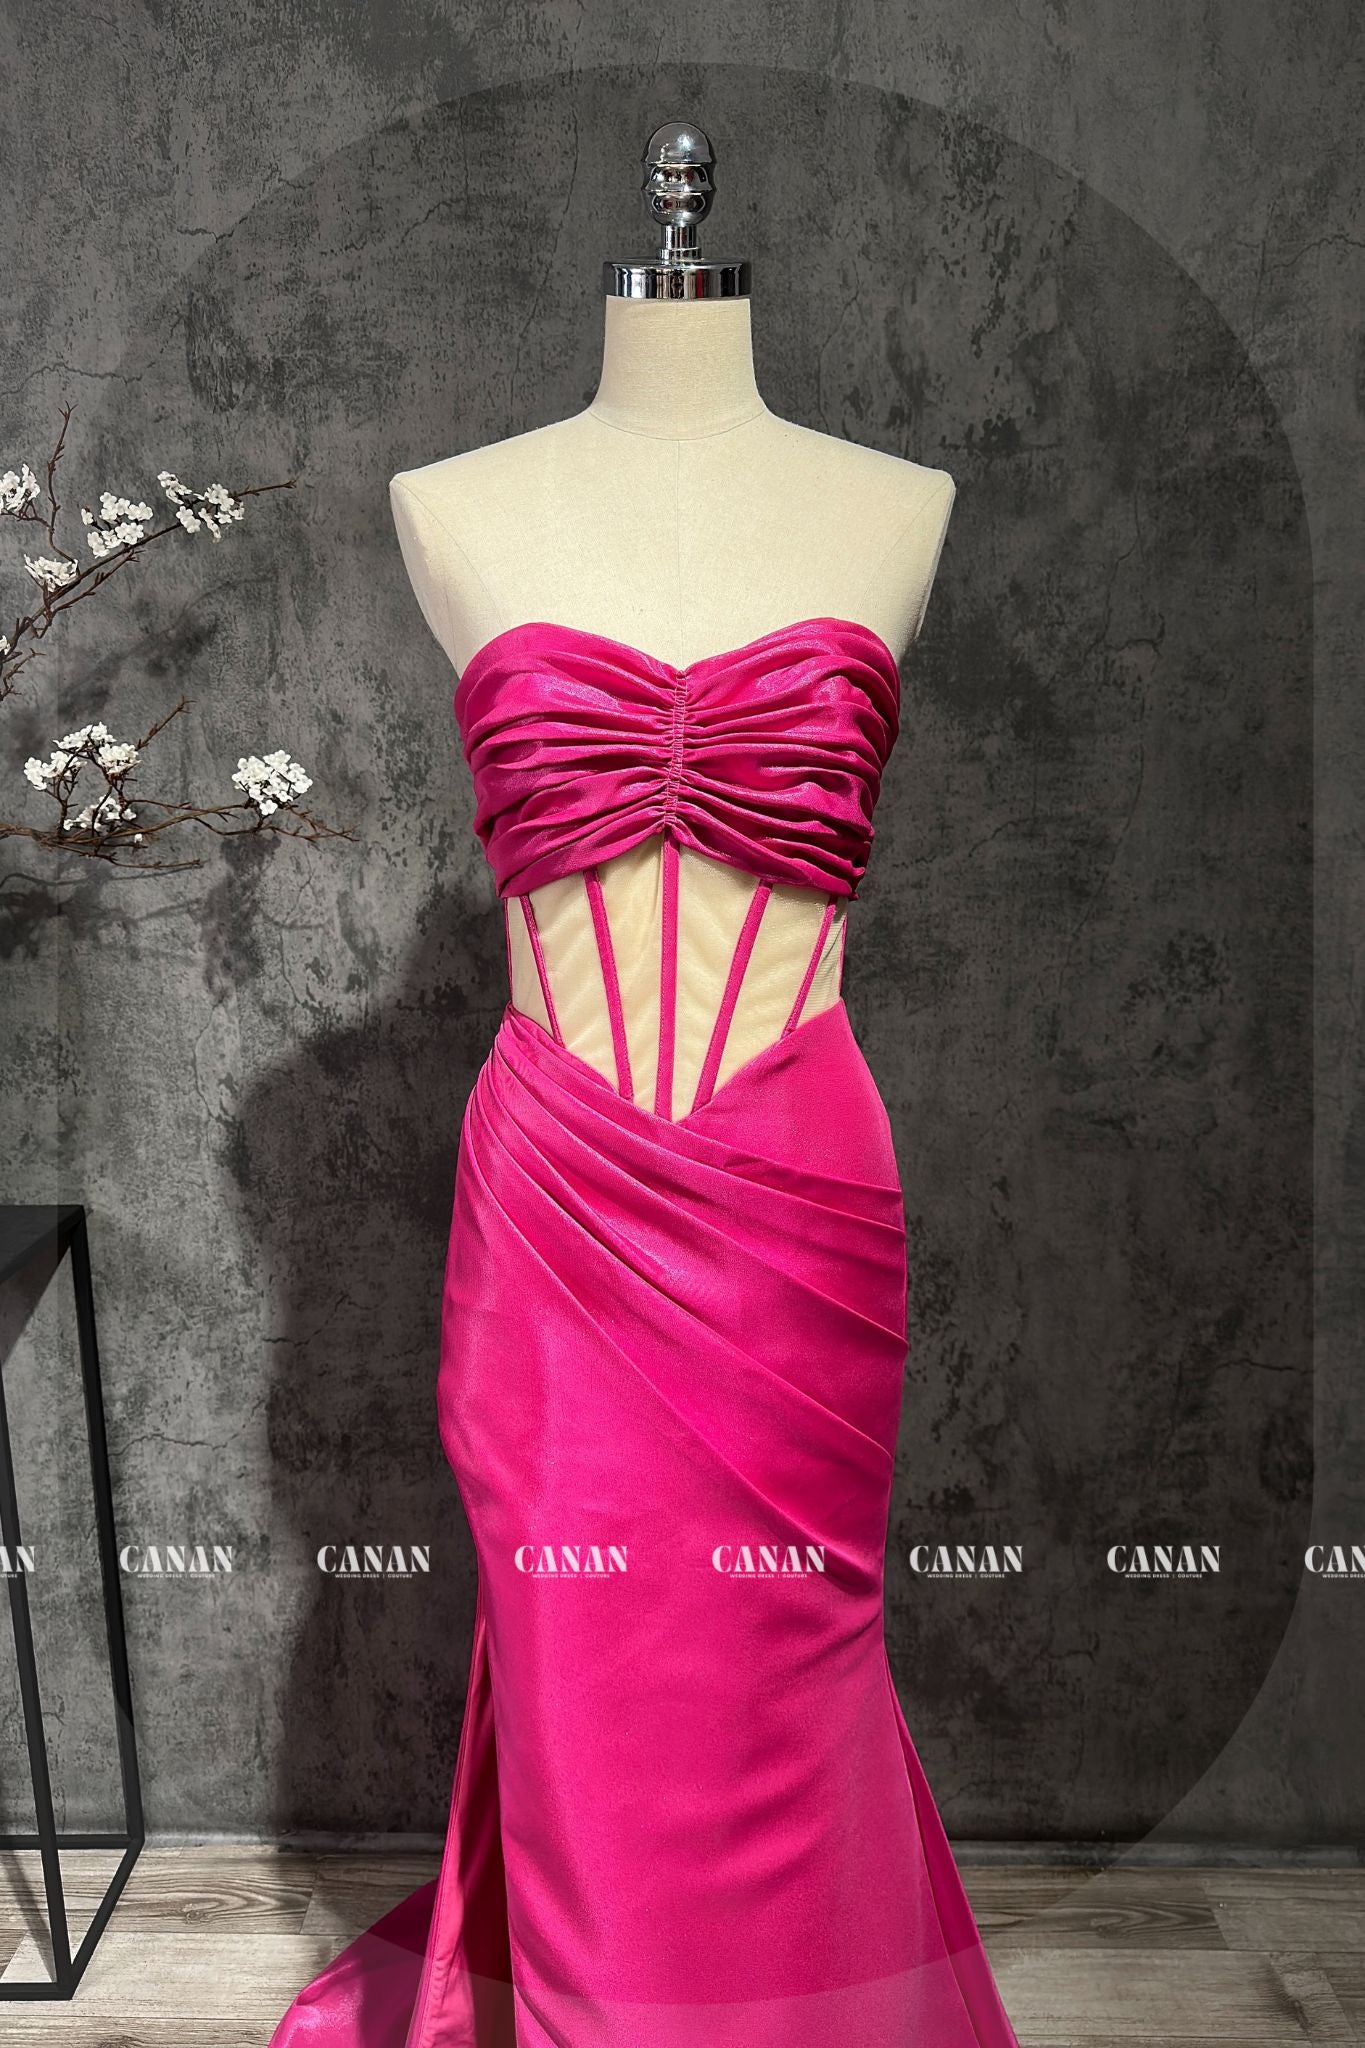 Alma - Lotus Pink Evening Dress with See-Through Corset